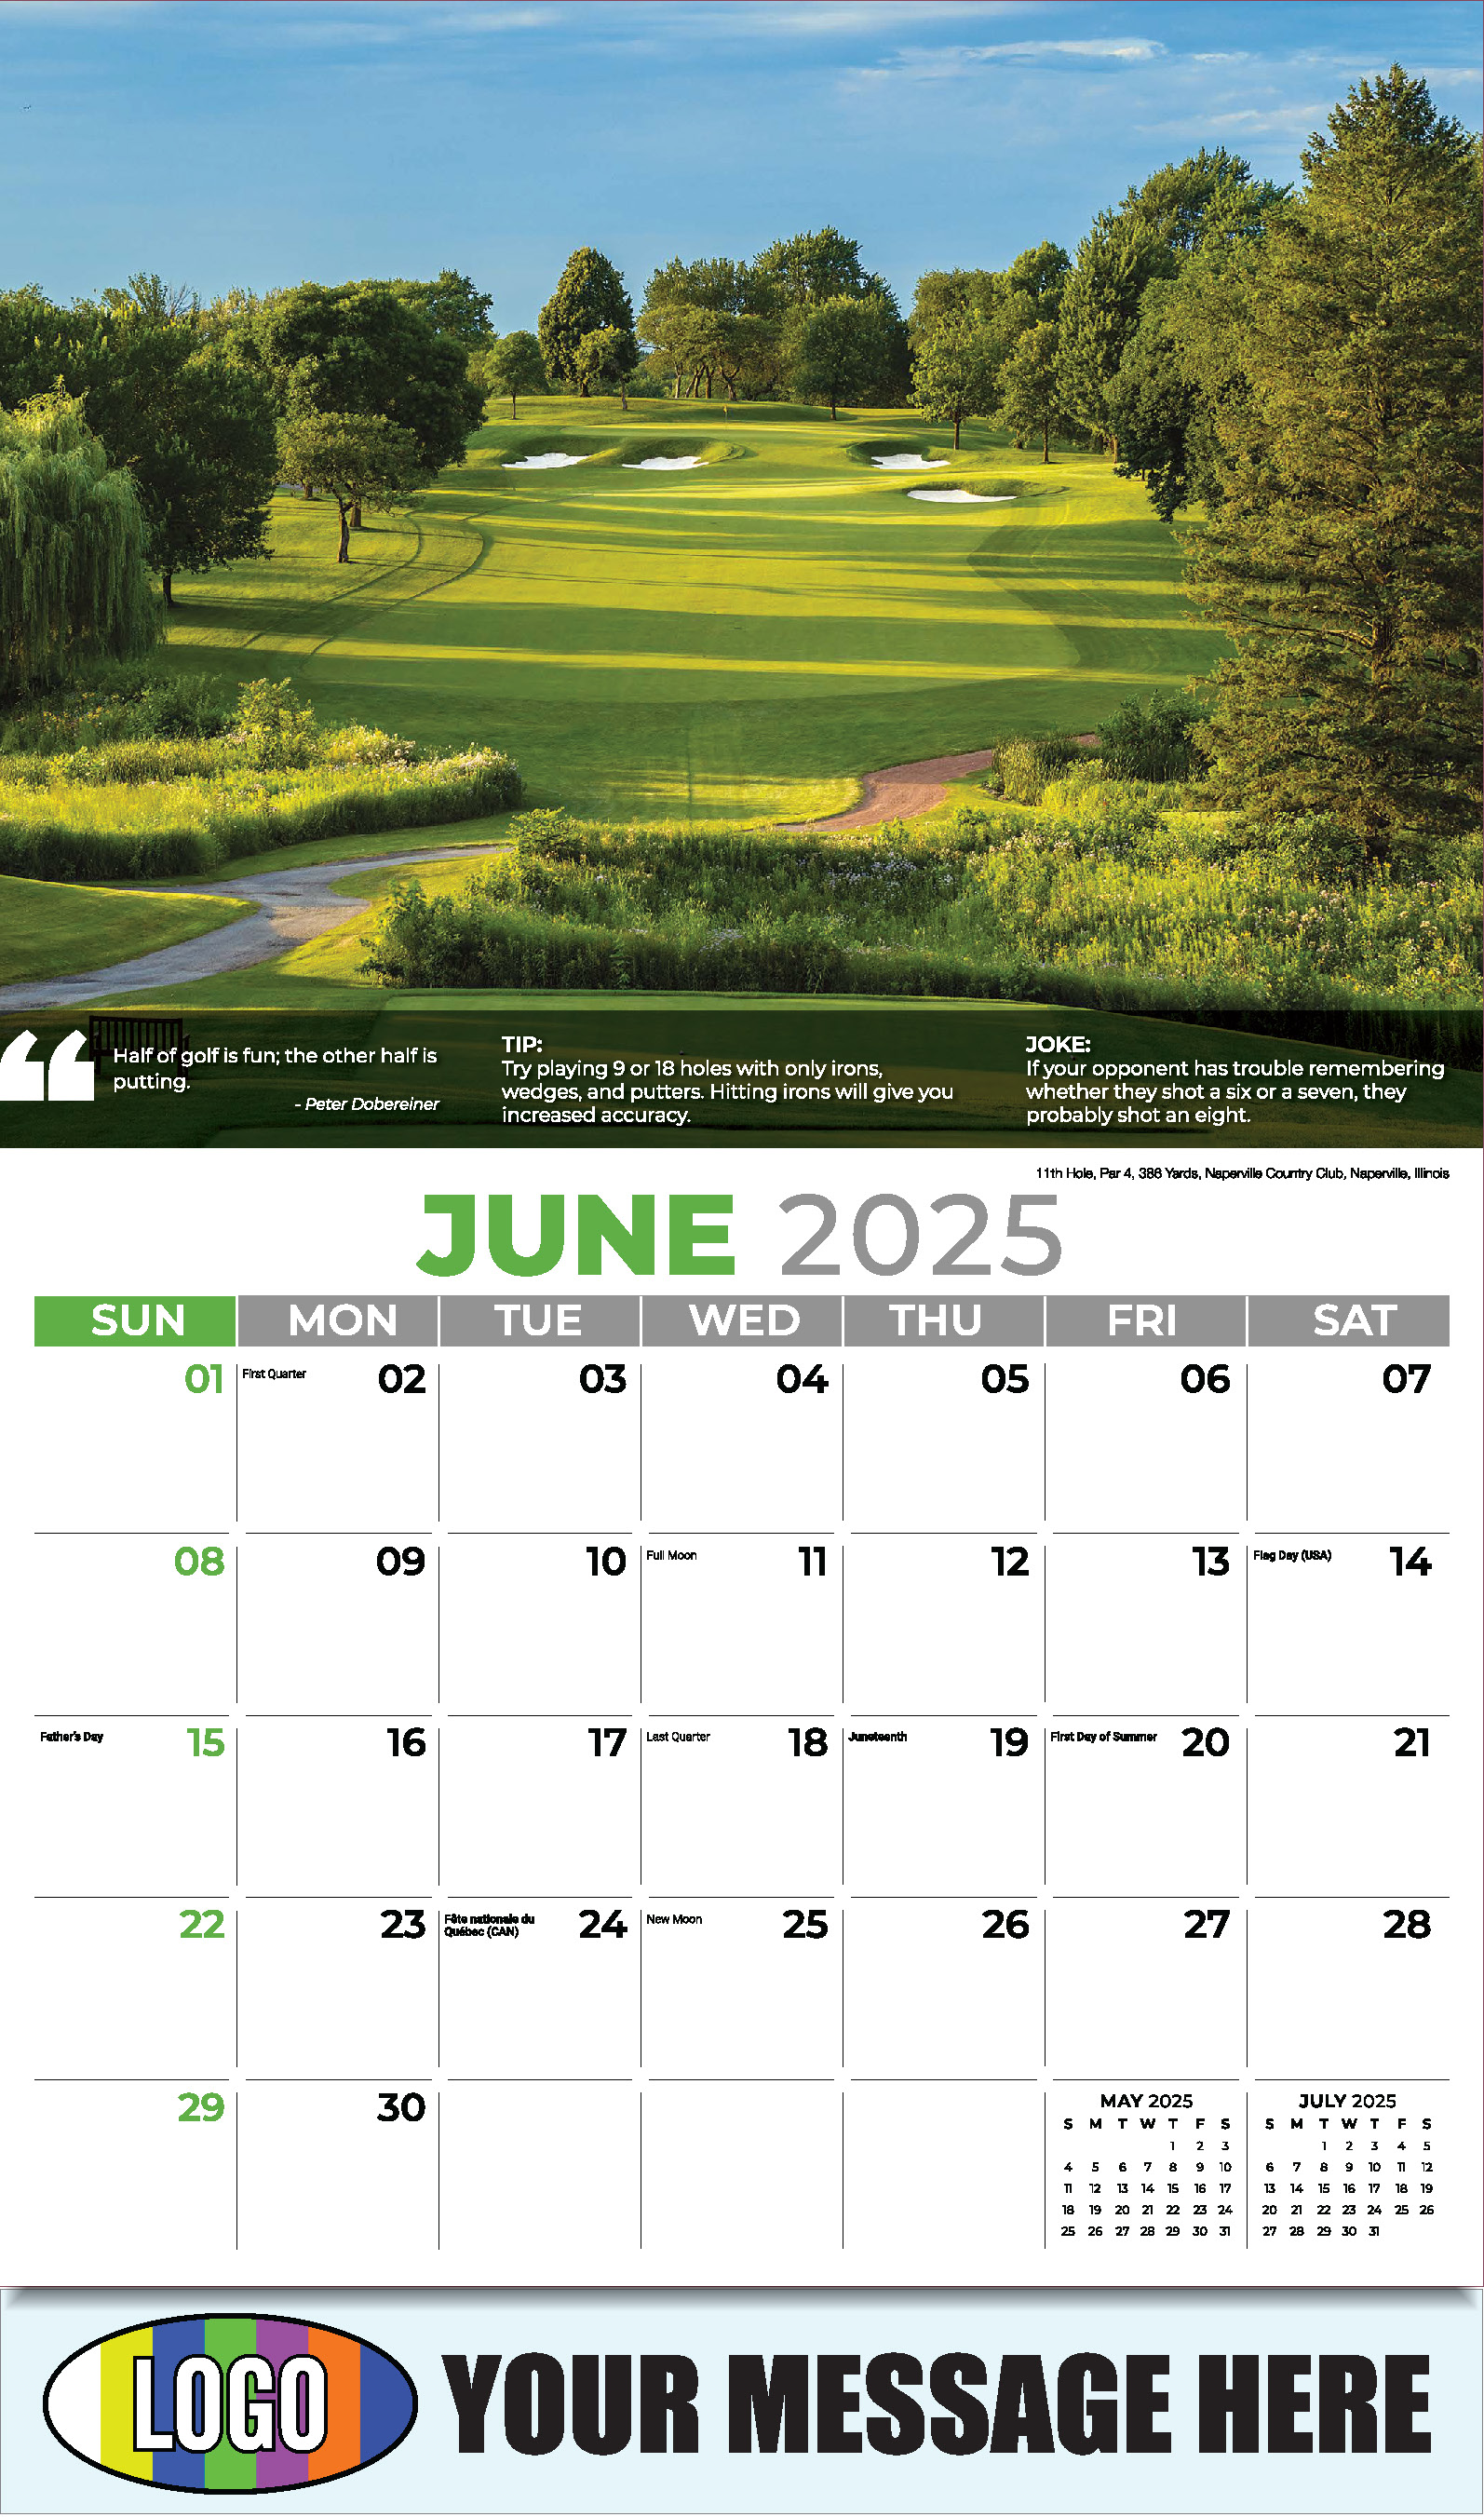 Golf Tips 2025 Business Promo Calendar - June